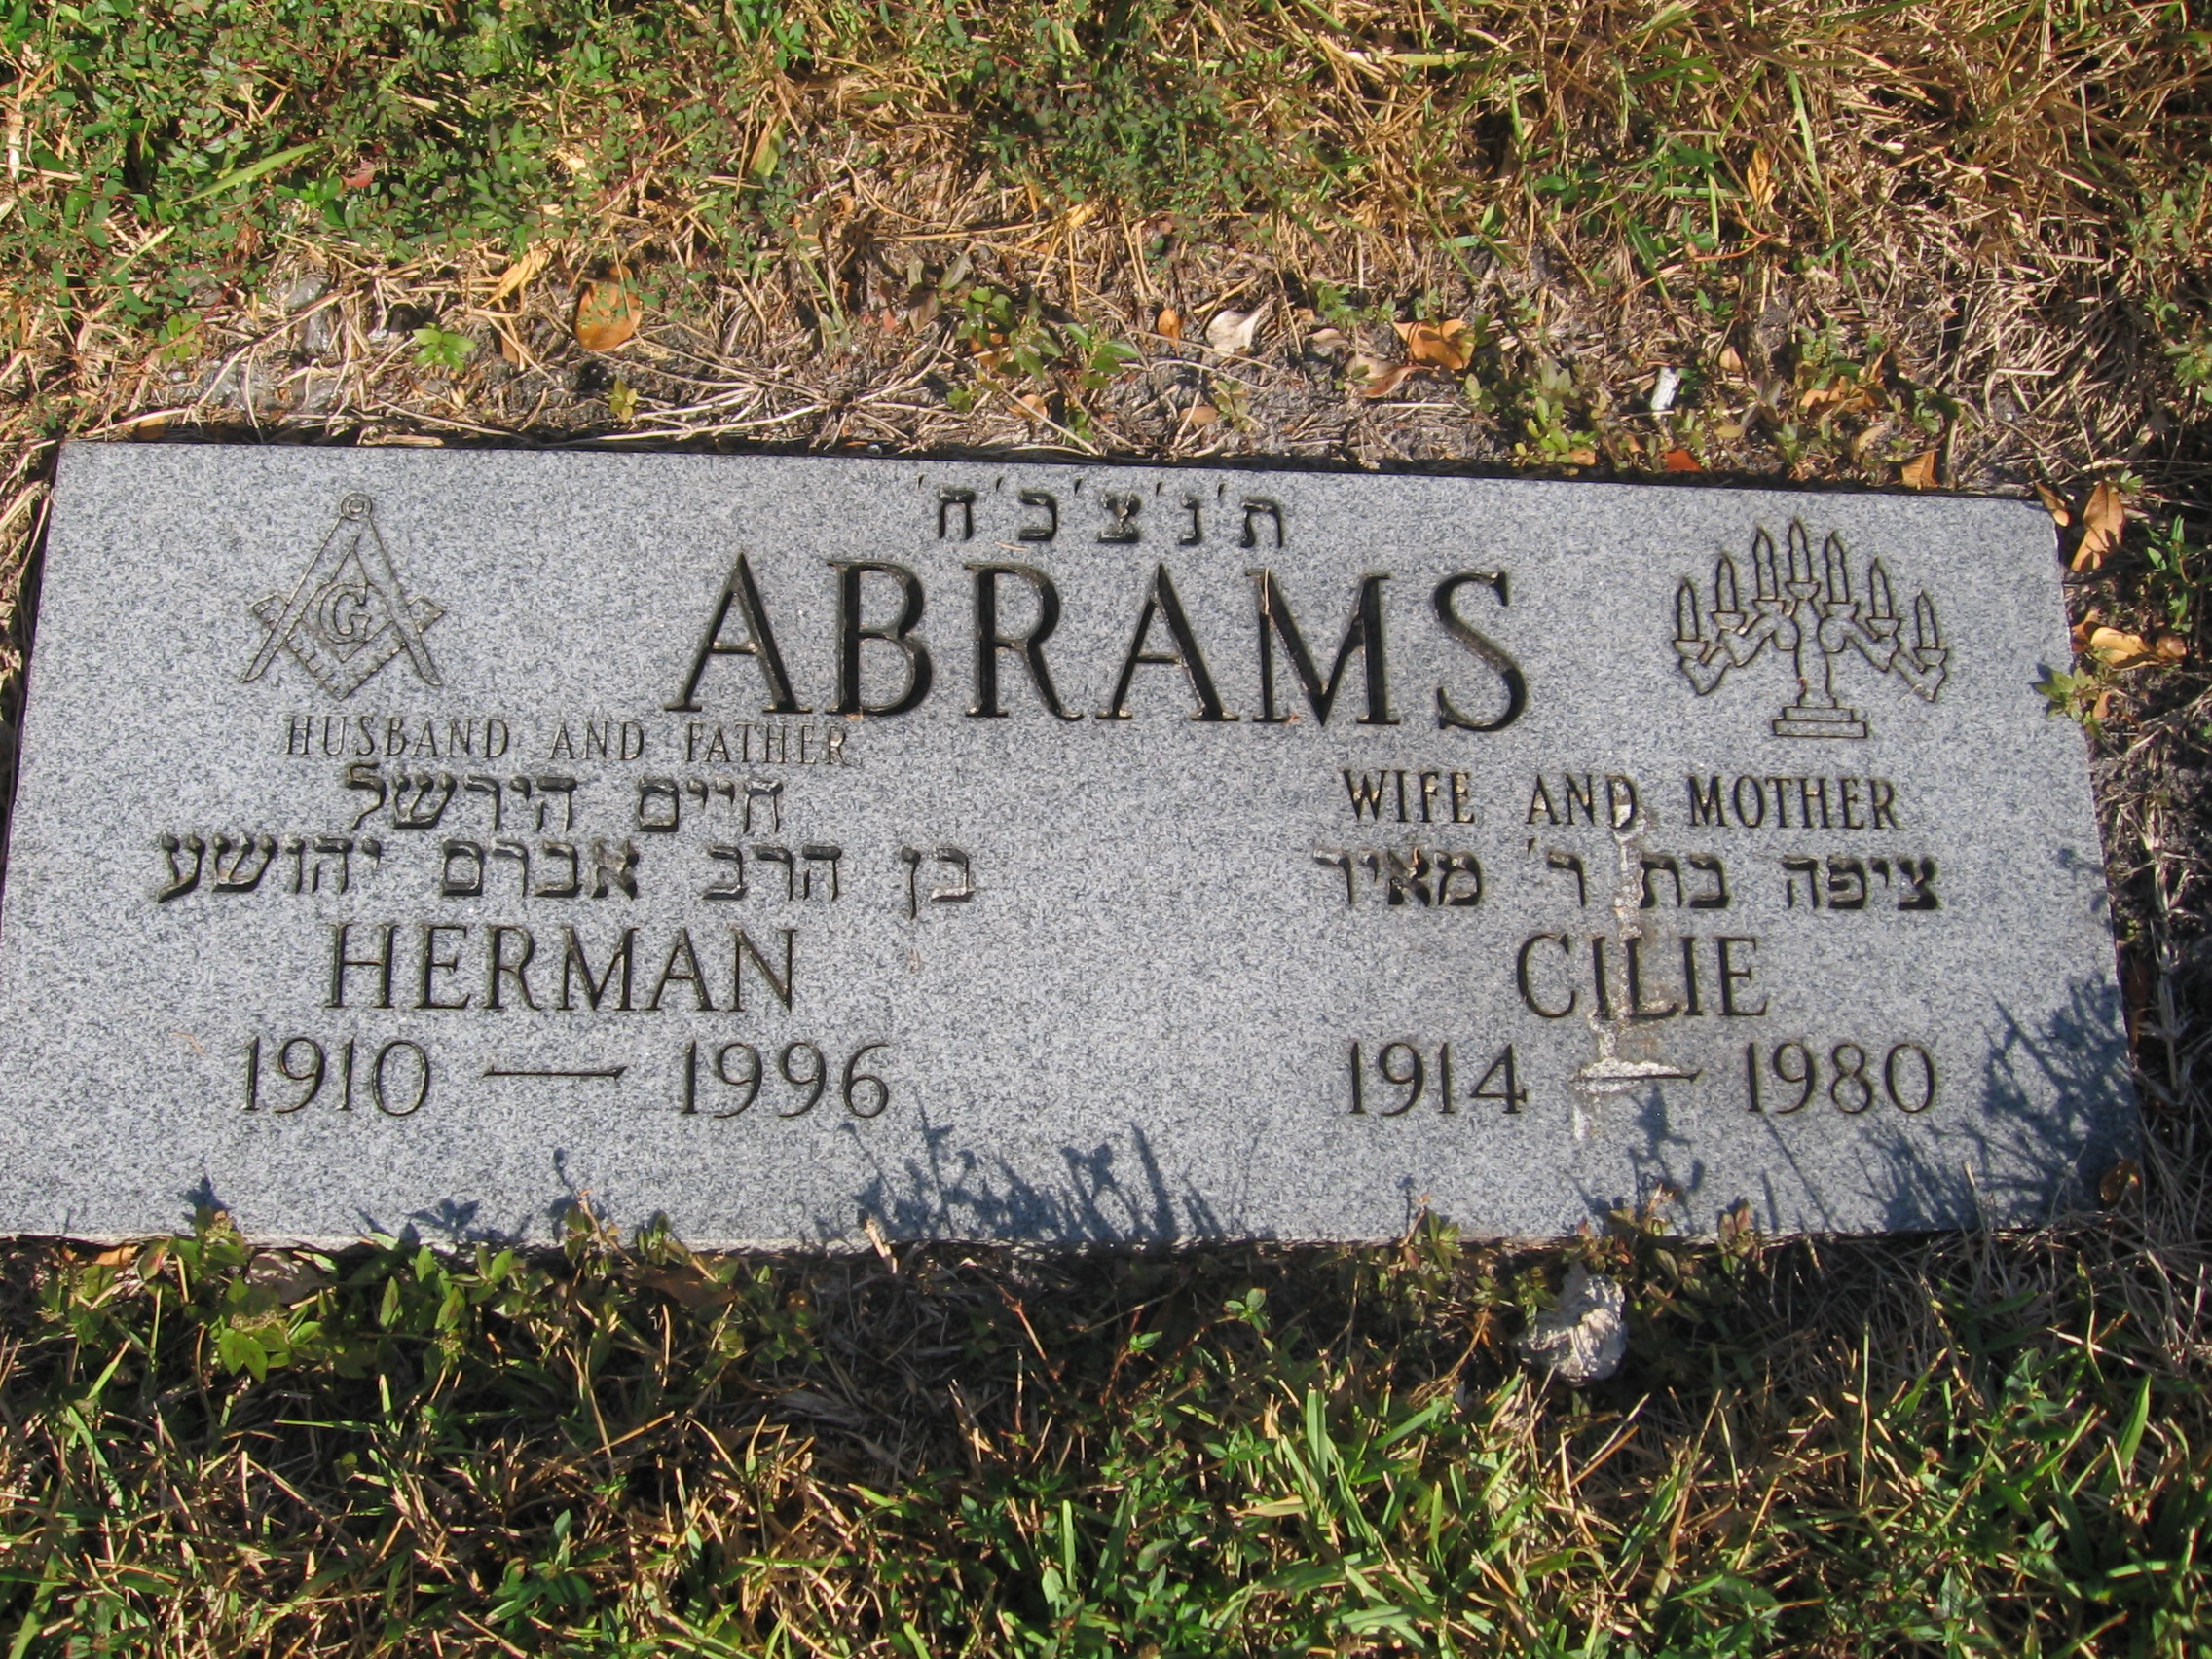 Herman Abrams